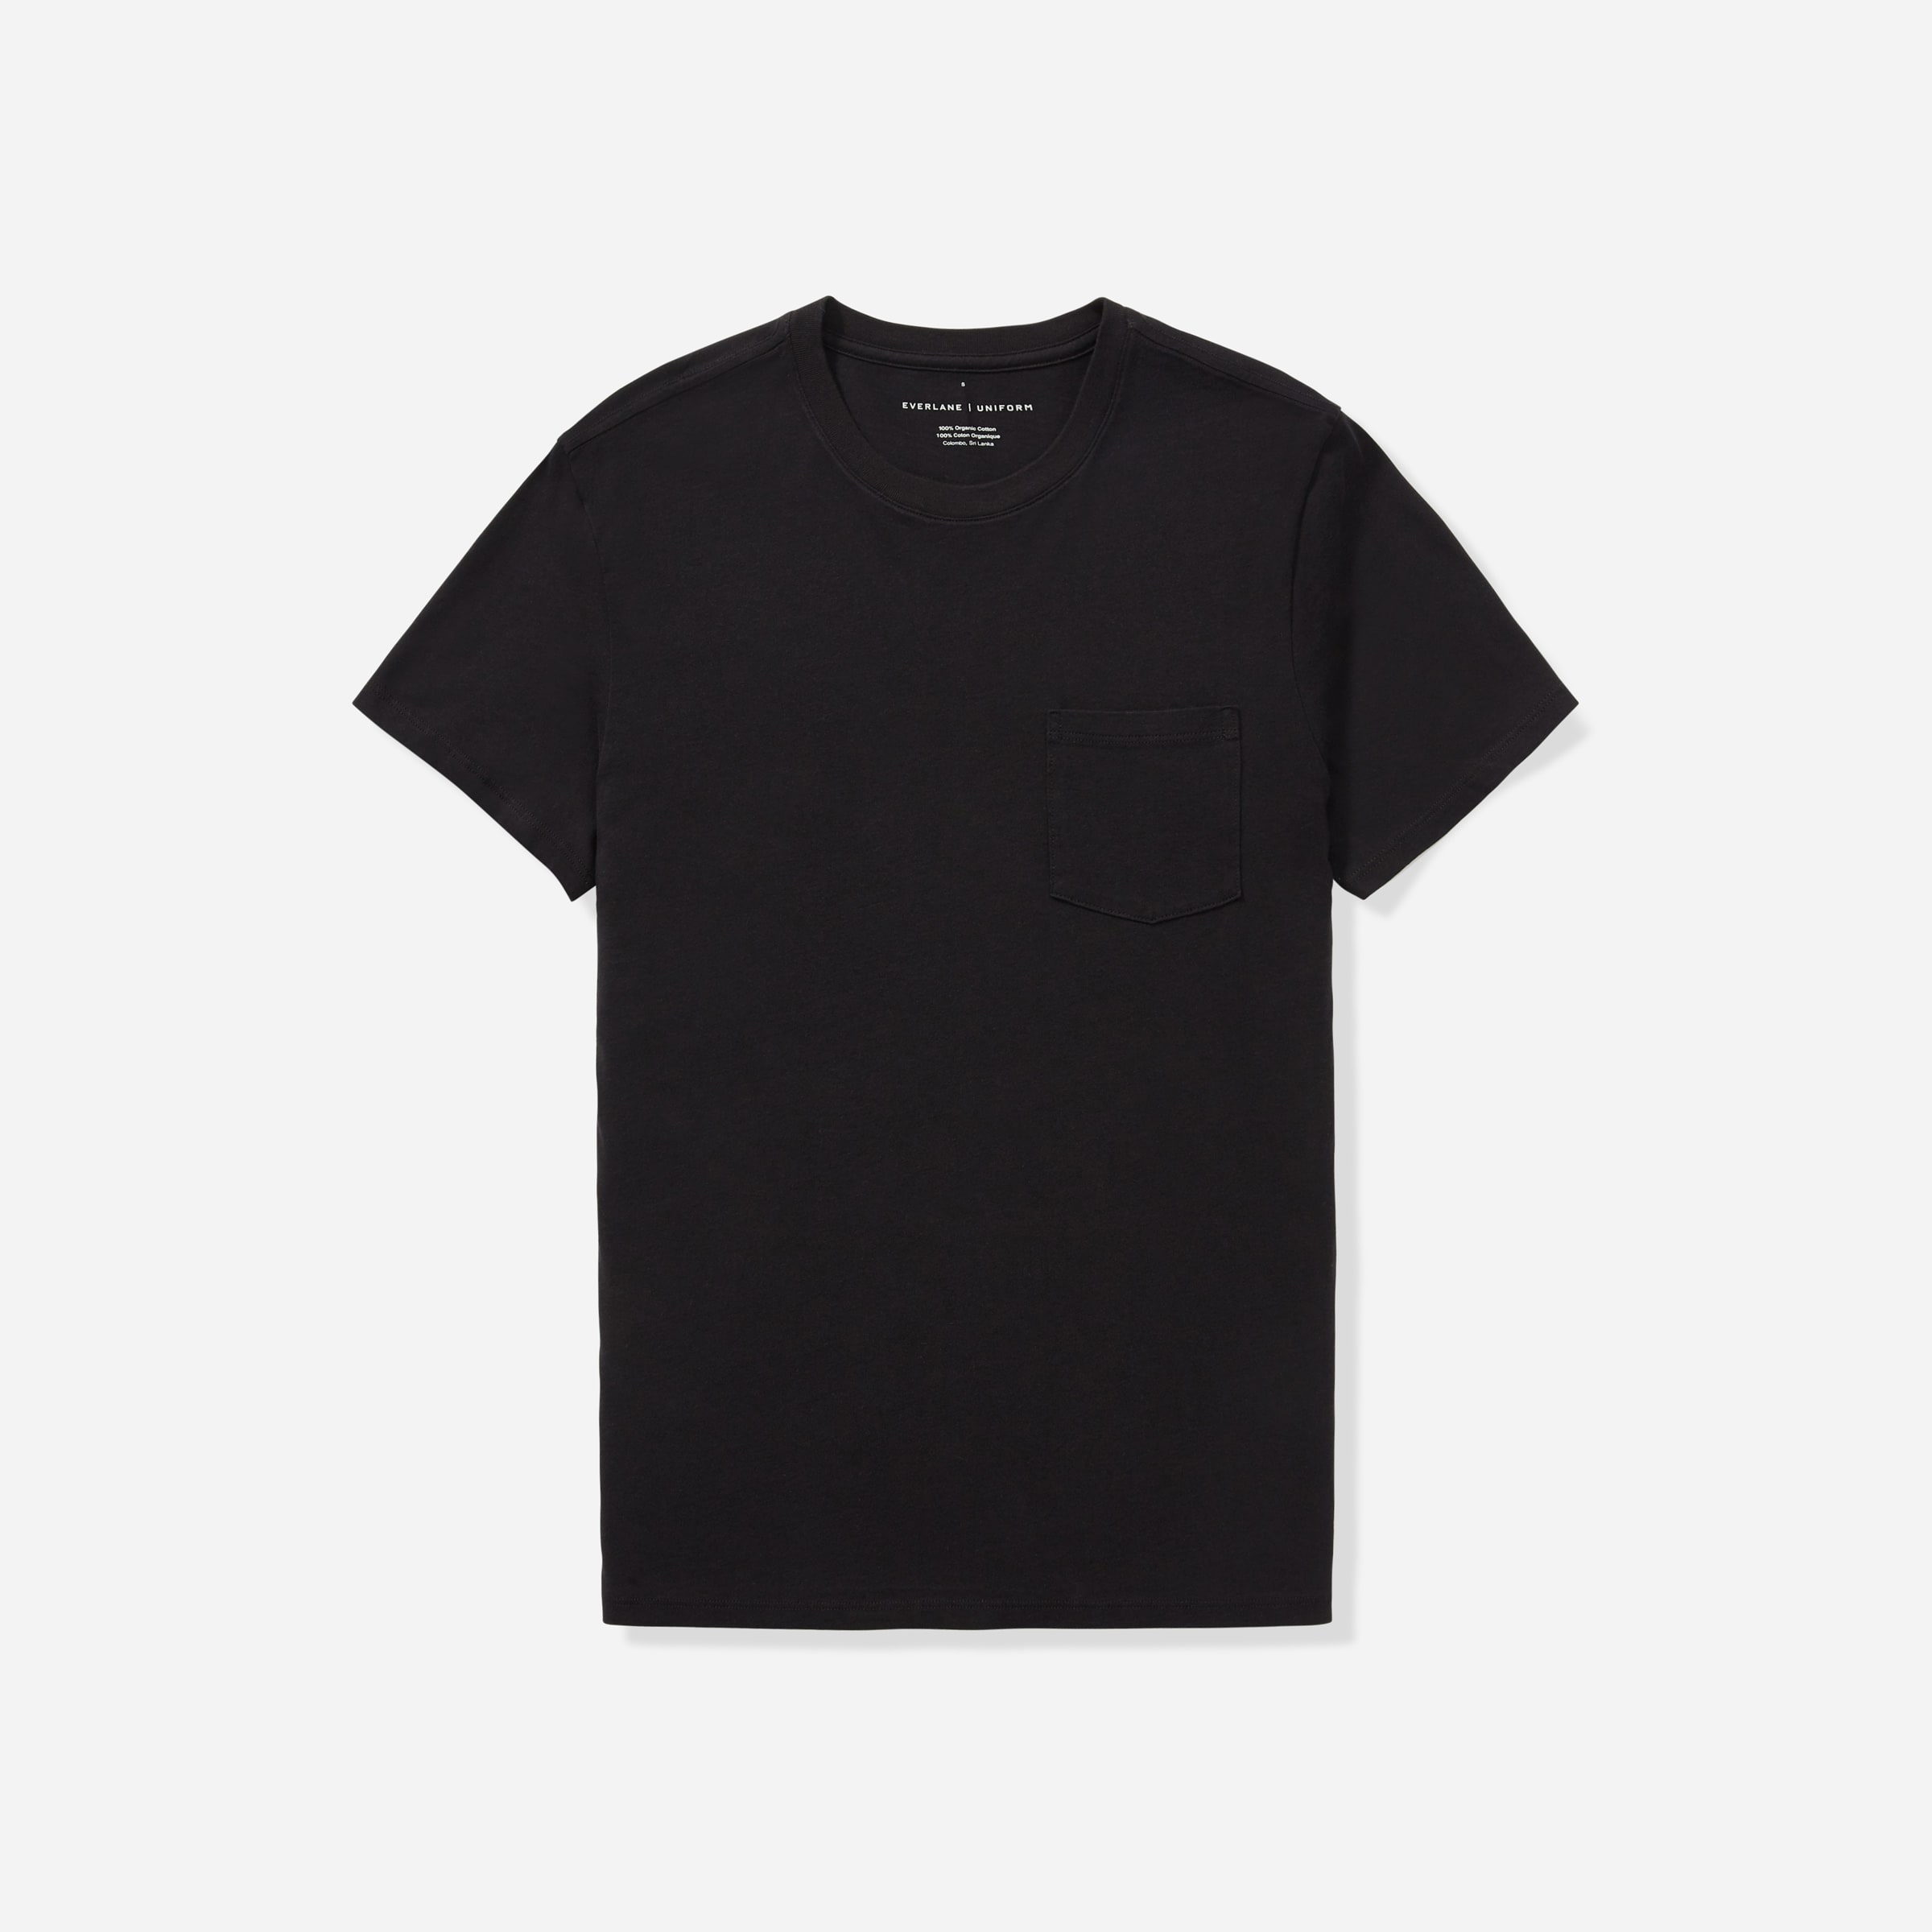 black tee shirt with pocket